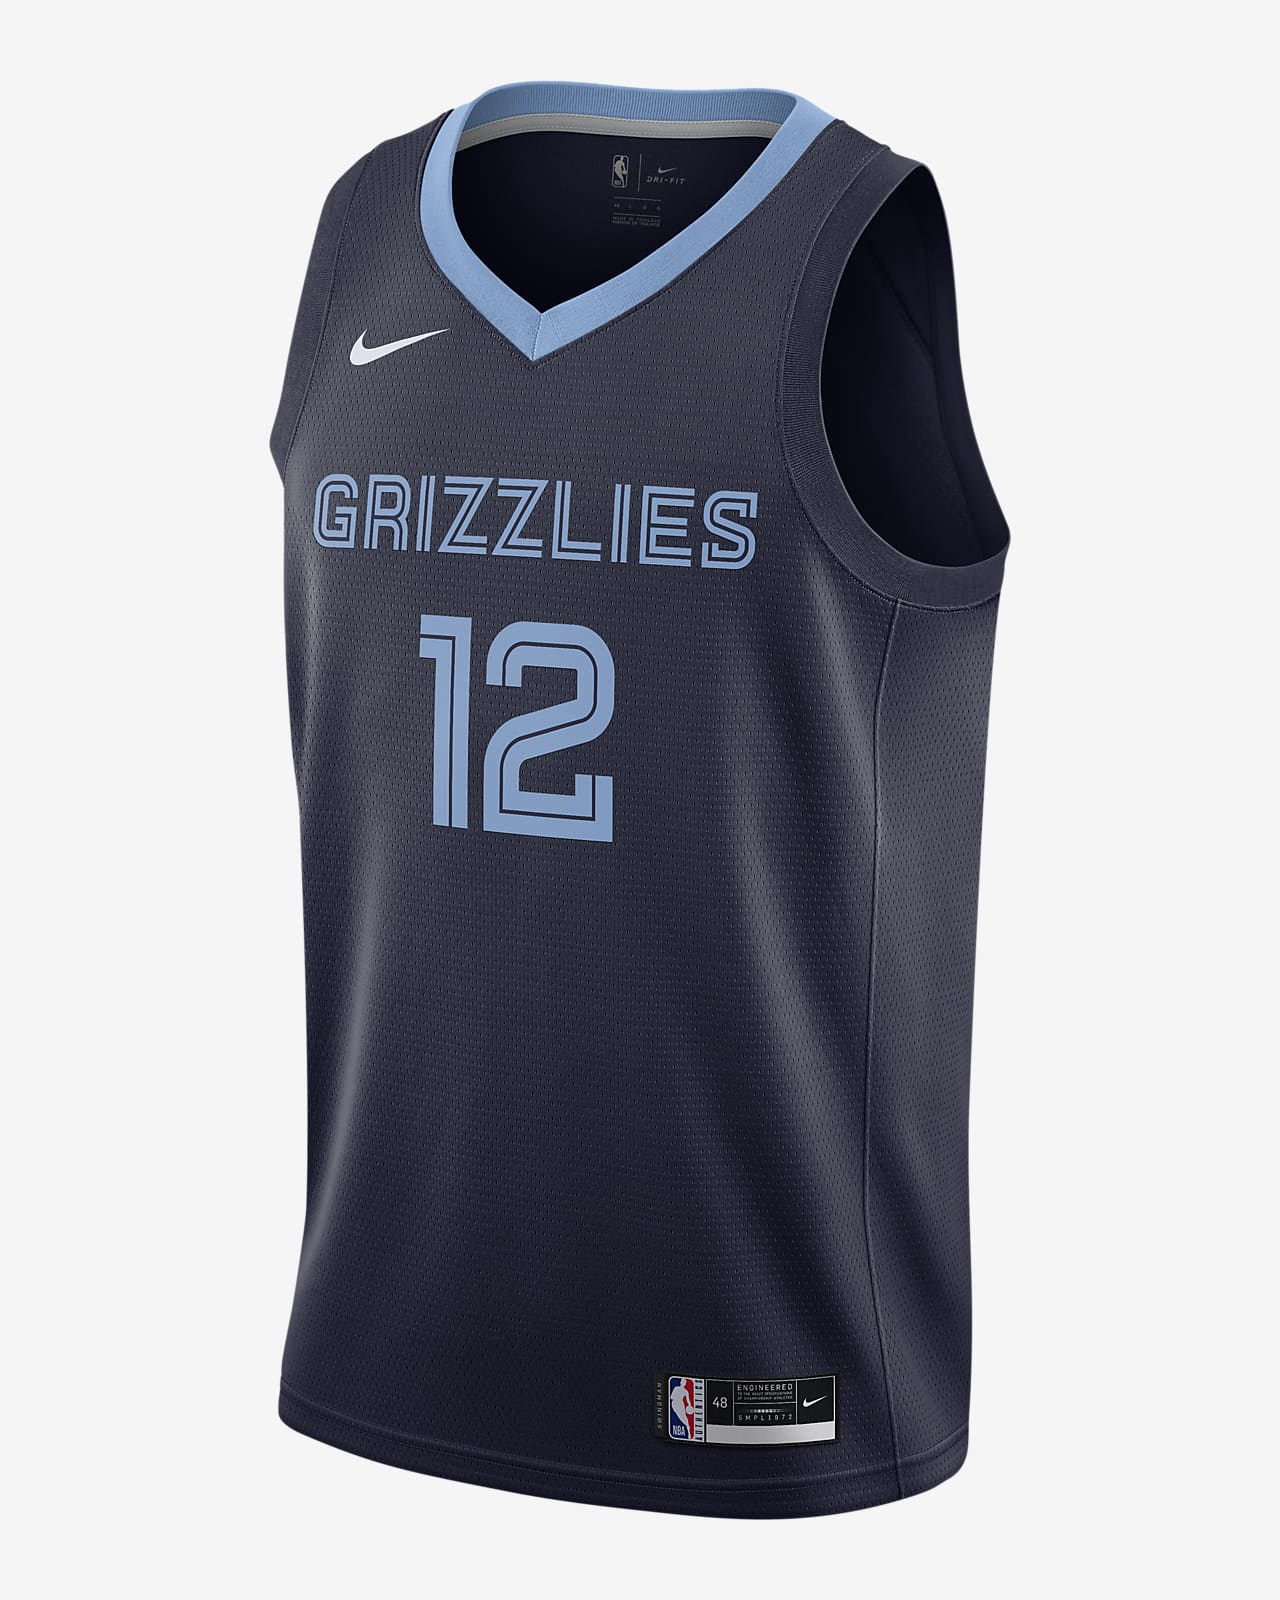 Jersey Nike NBA Swingman Ja Morant Grizzlies Icon Edition 2020